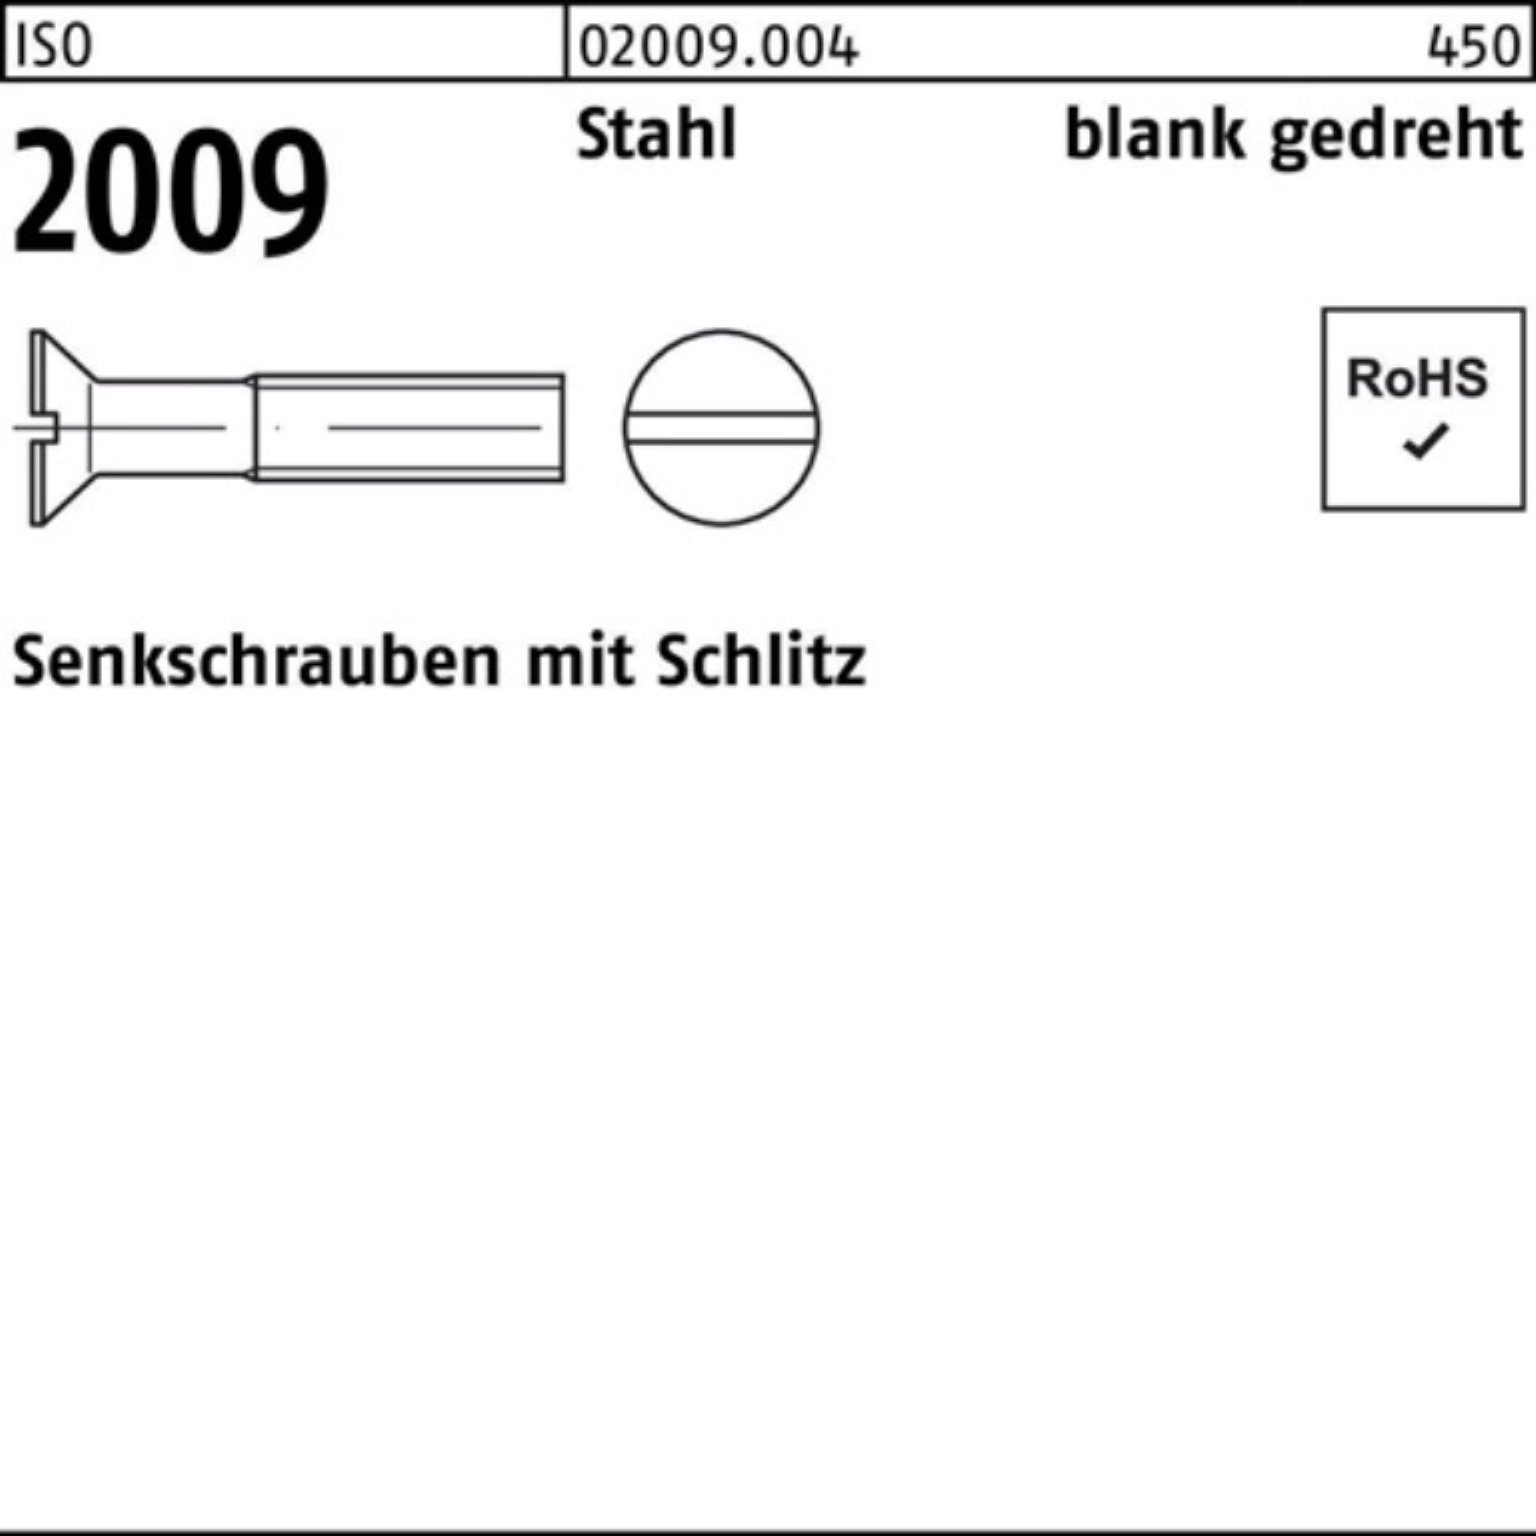 Reyher Senkschraube 100er Pack Senkschraube 4 1 M1,6x gedreht Schlitz blank Stahl 2009 ISO